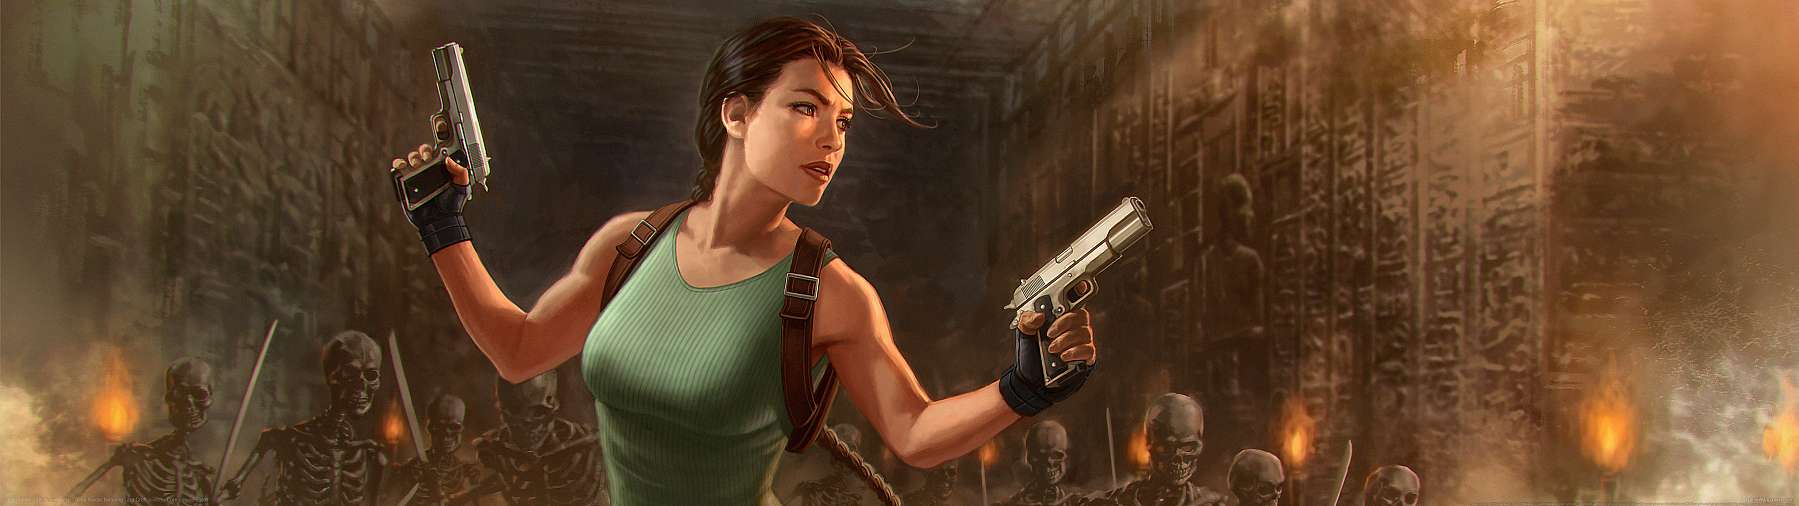 Tomb Raider 25th Anniversary superwide achtergrond 02